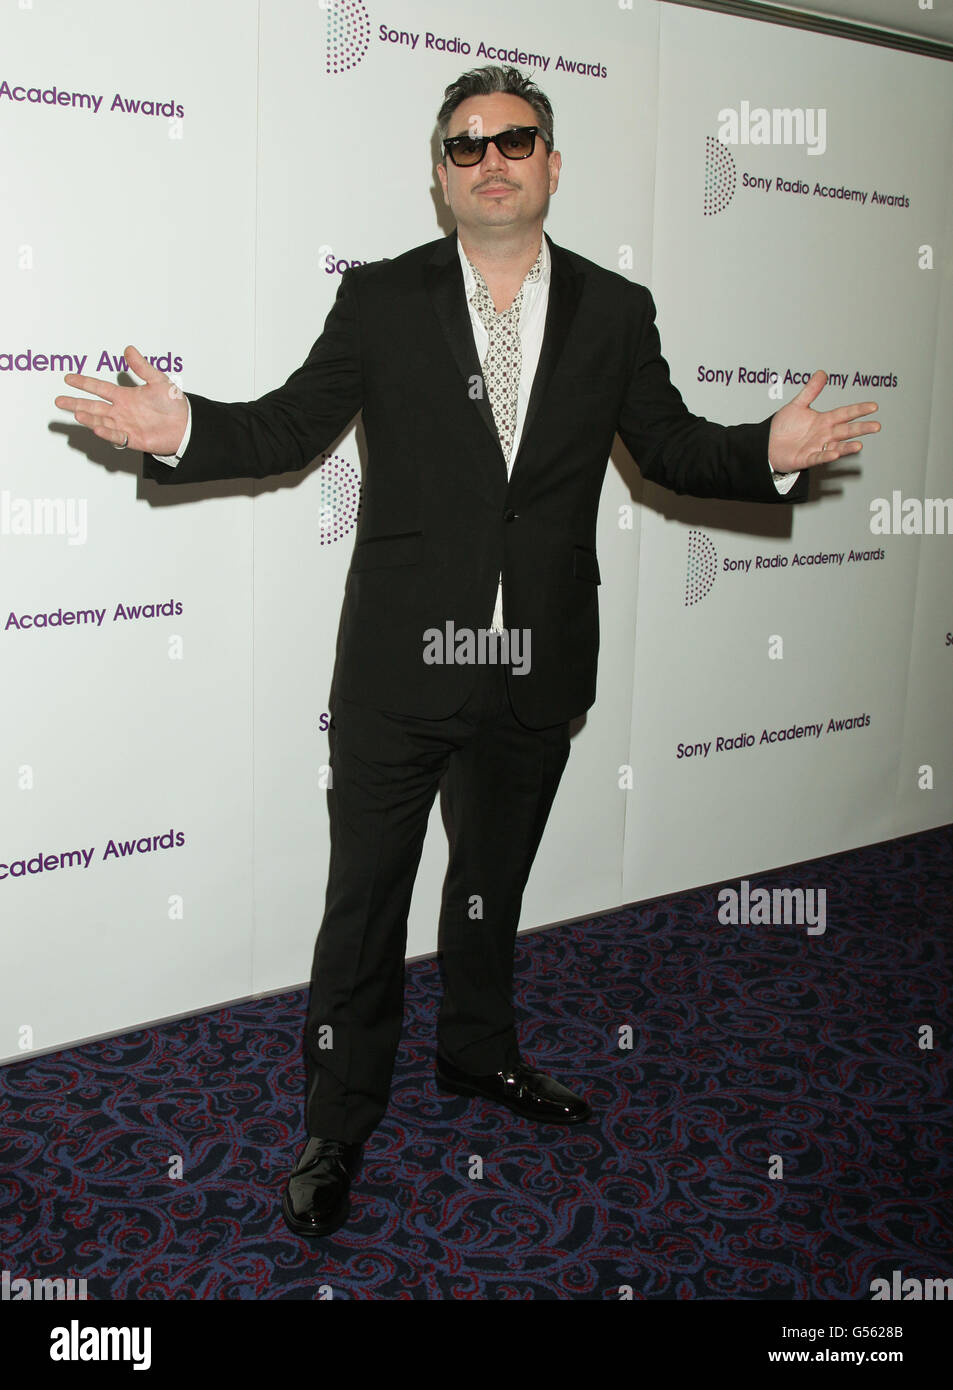 Sony Radio Academy Awards - London Stockfoto